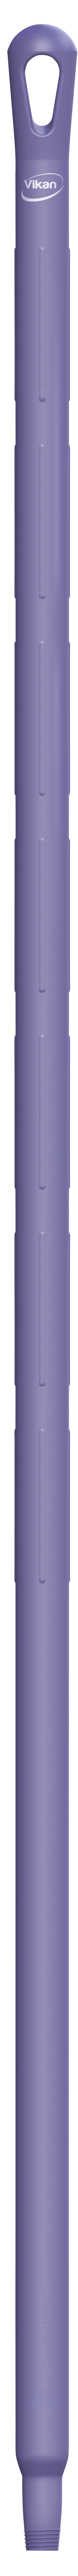 Vikan Ultra Hygiene Steel 1500mm 29628 paars